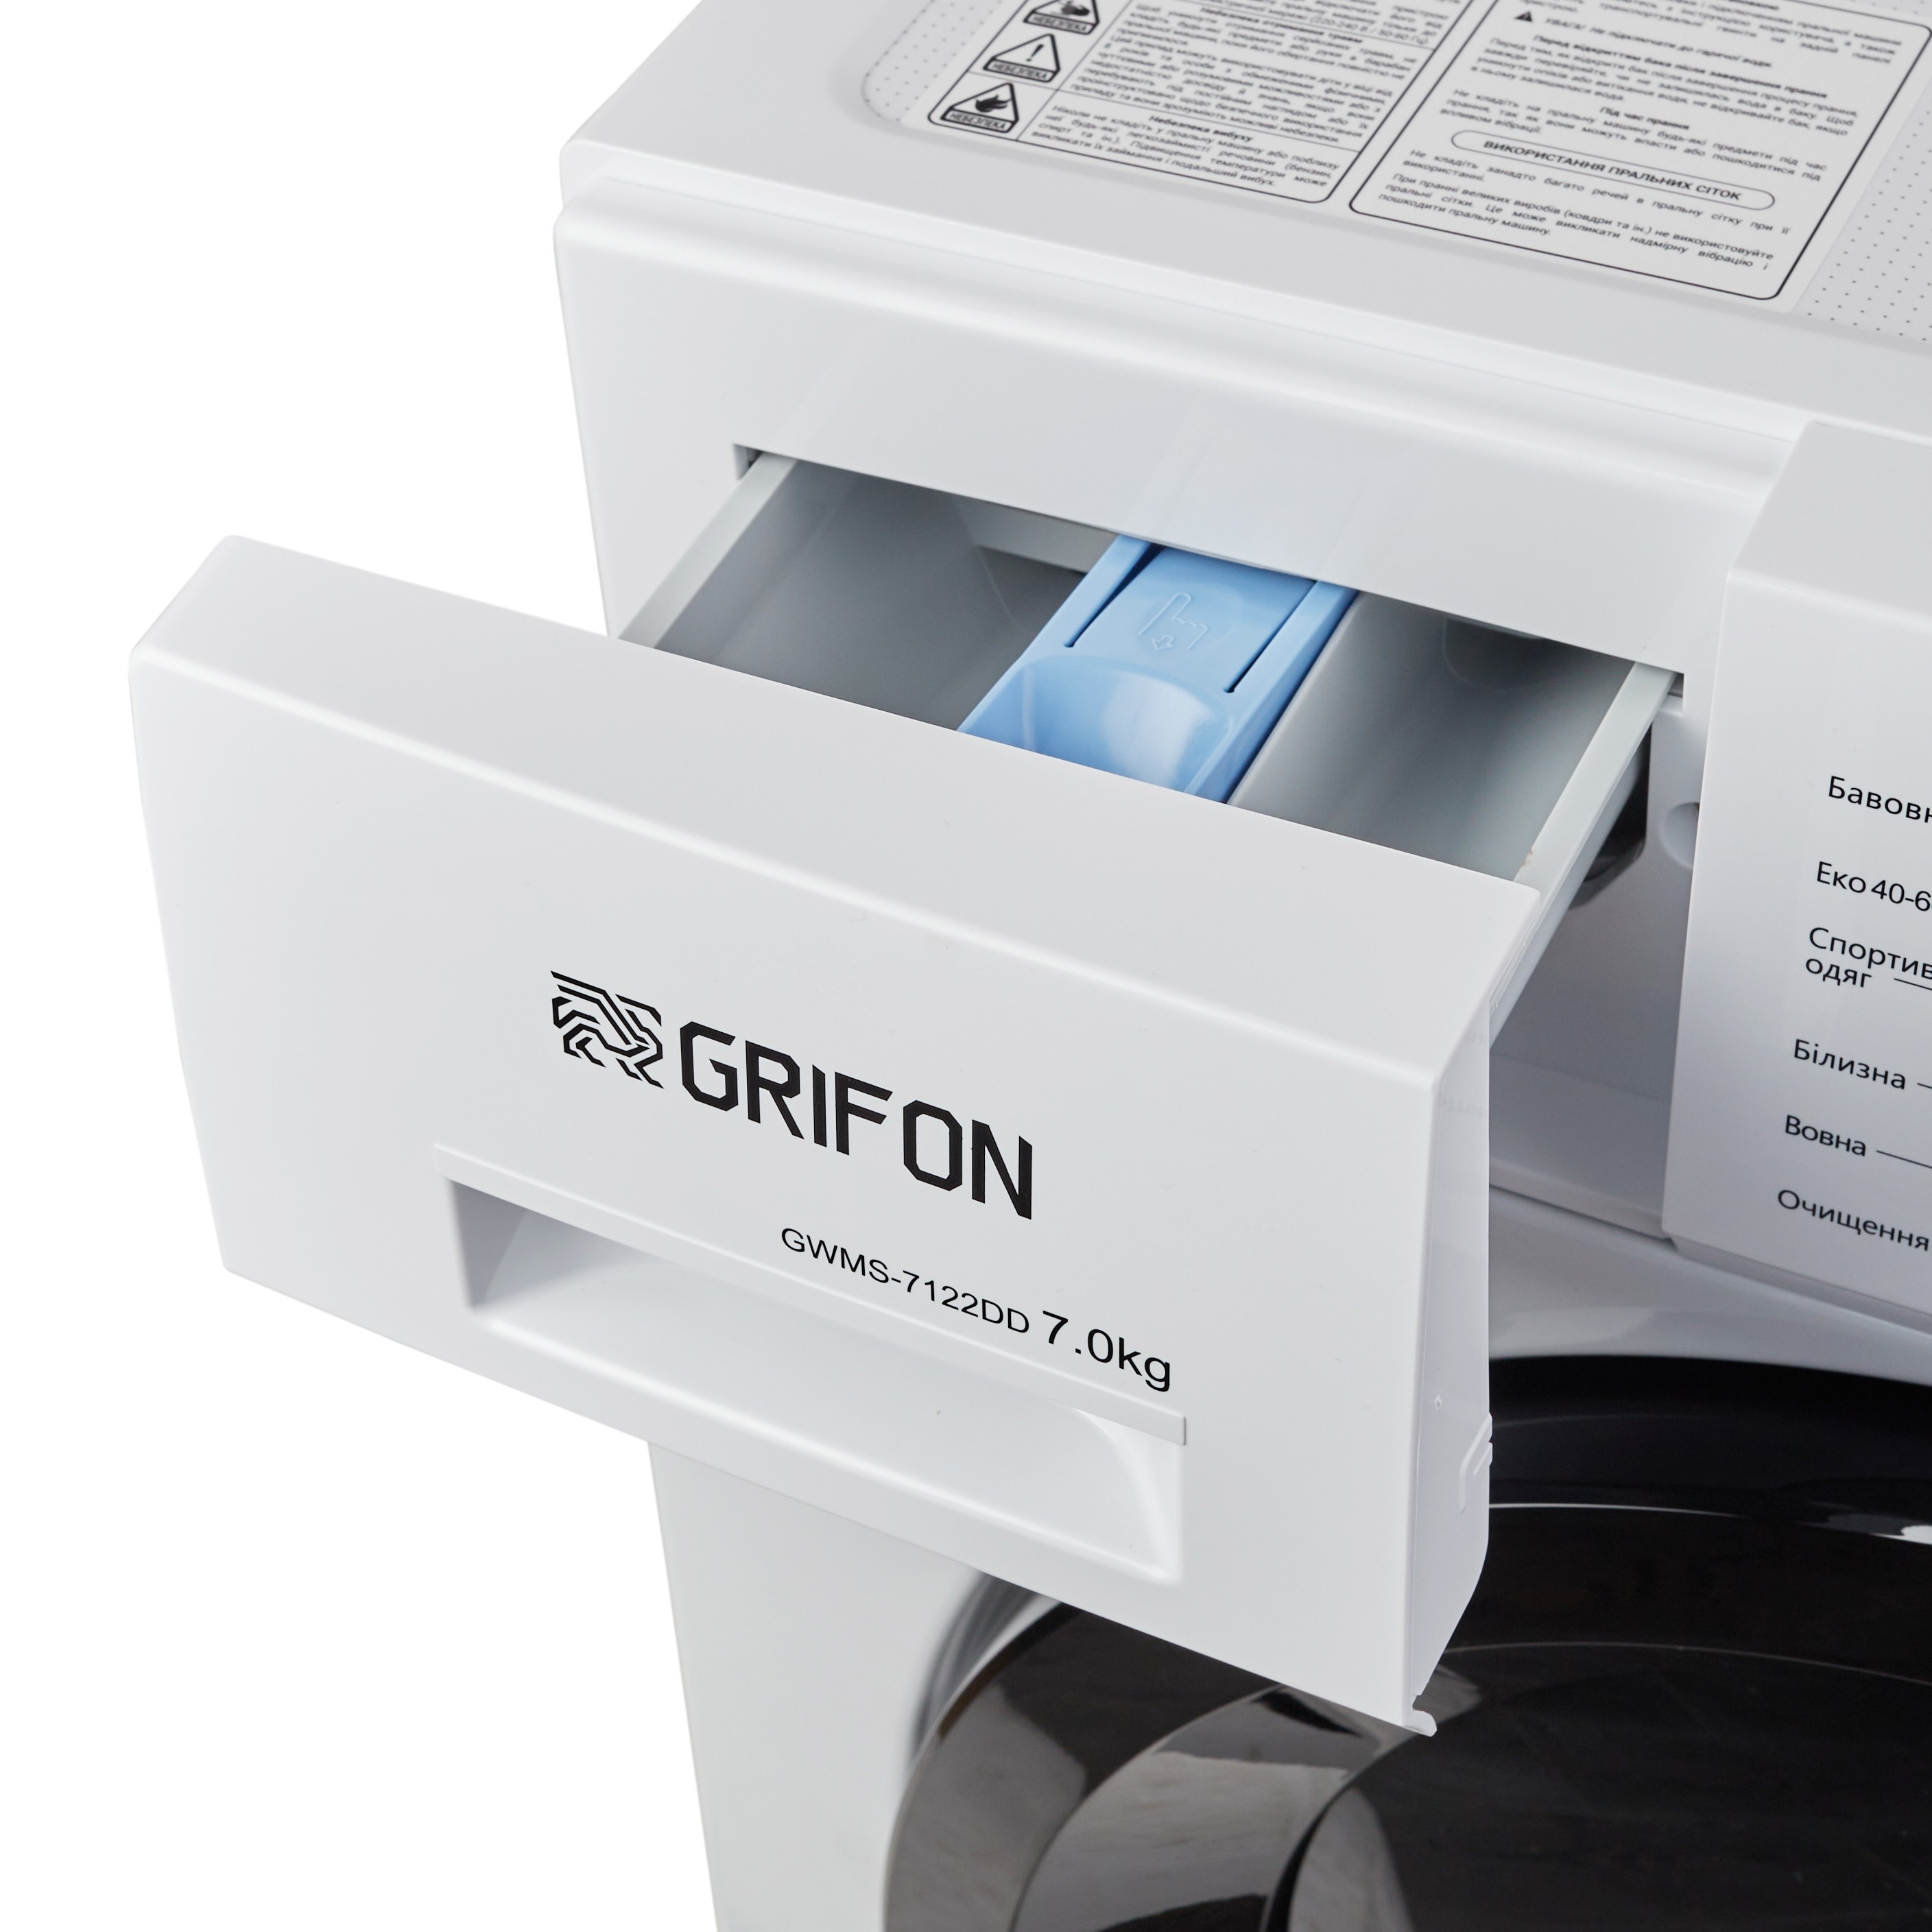 Пральна машина Grifon GWMS-7122DD інструкція - зображення 6